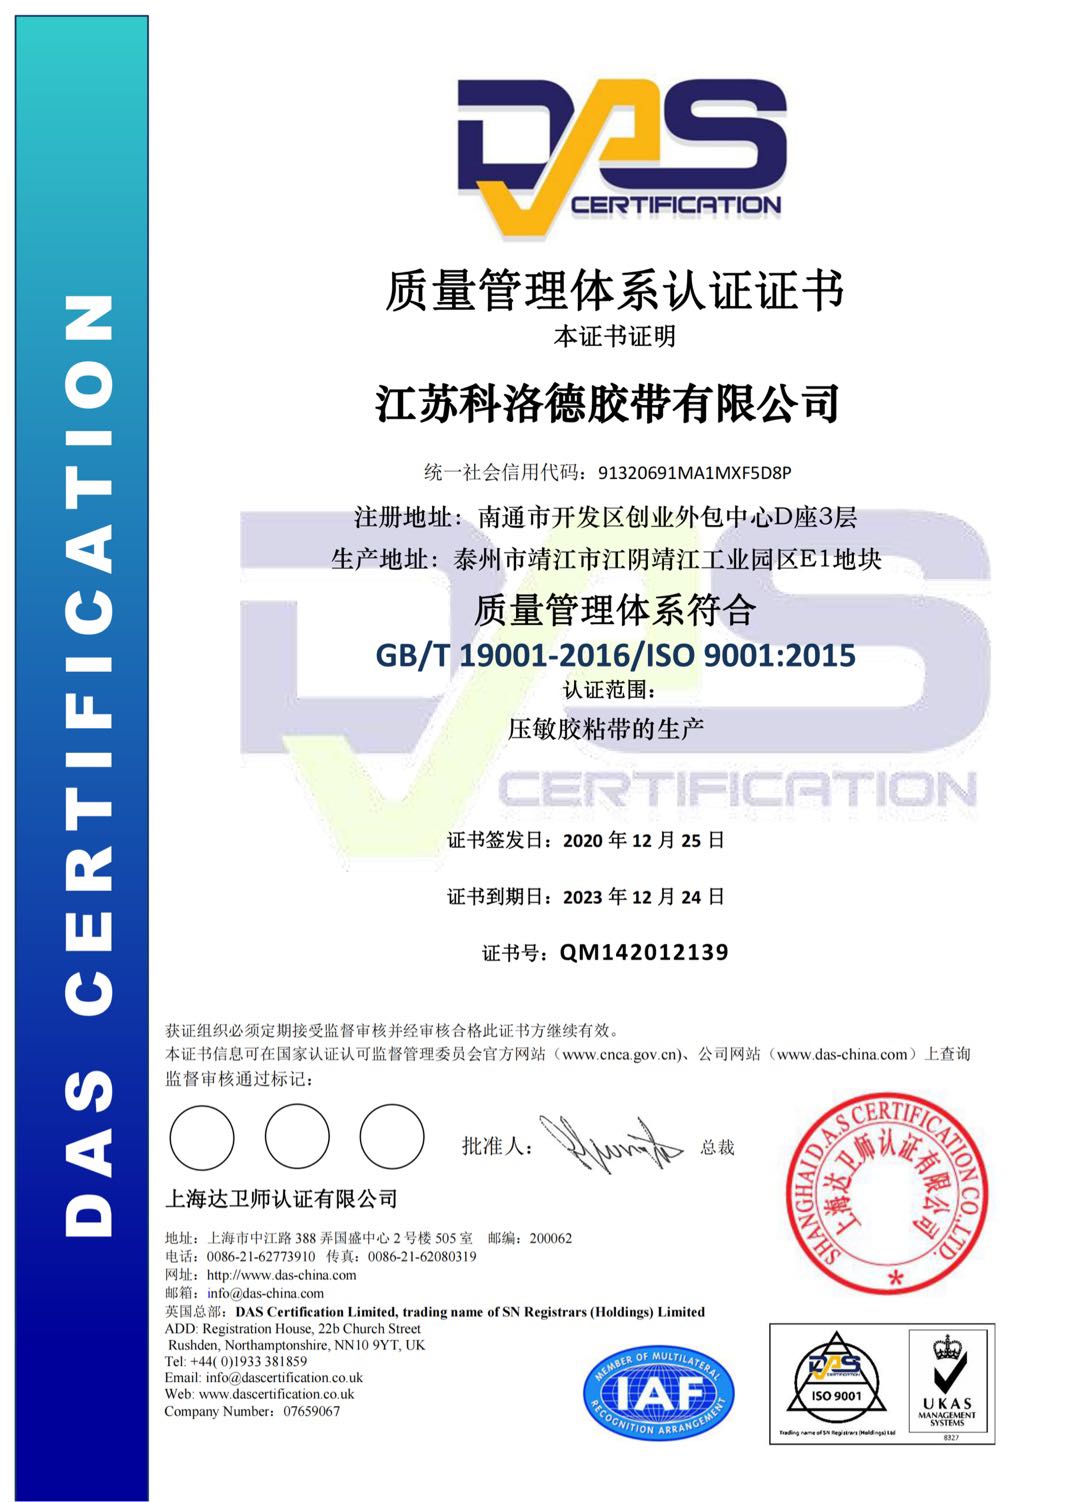 GB/T 19001-2016 / ISO 9001:2015 质量管理体系认证证书